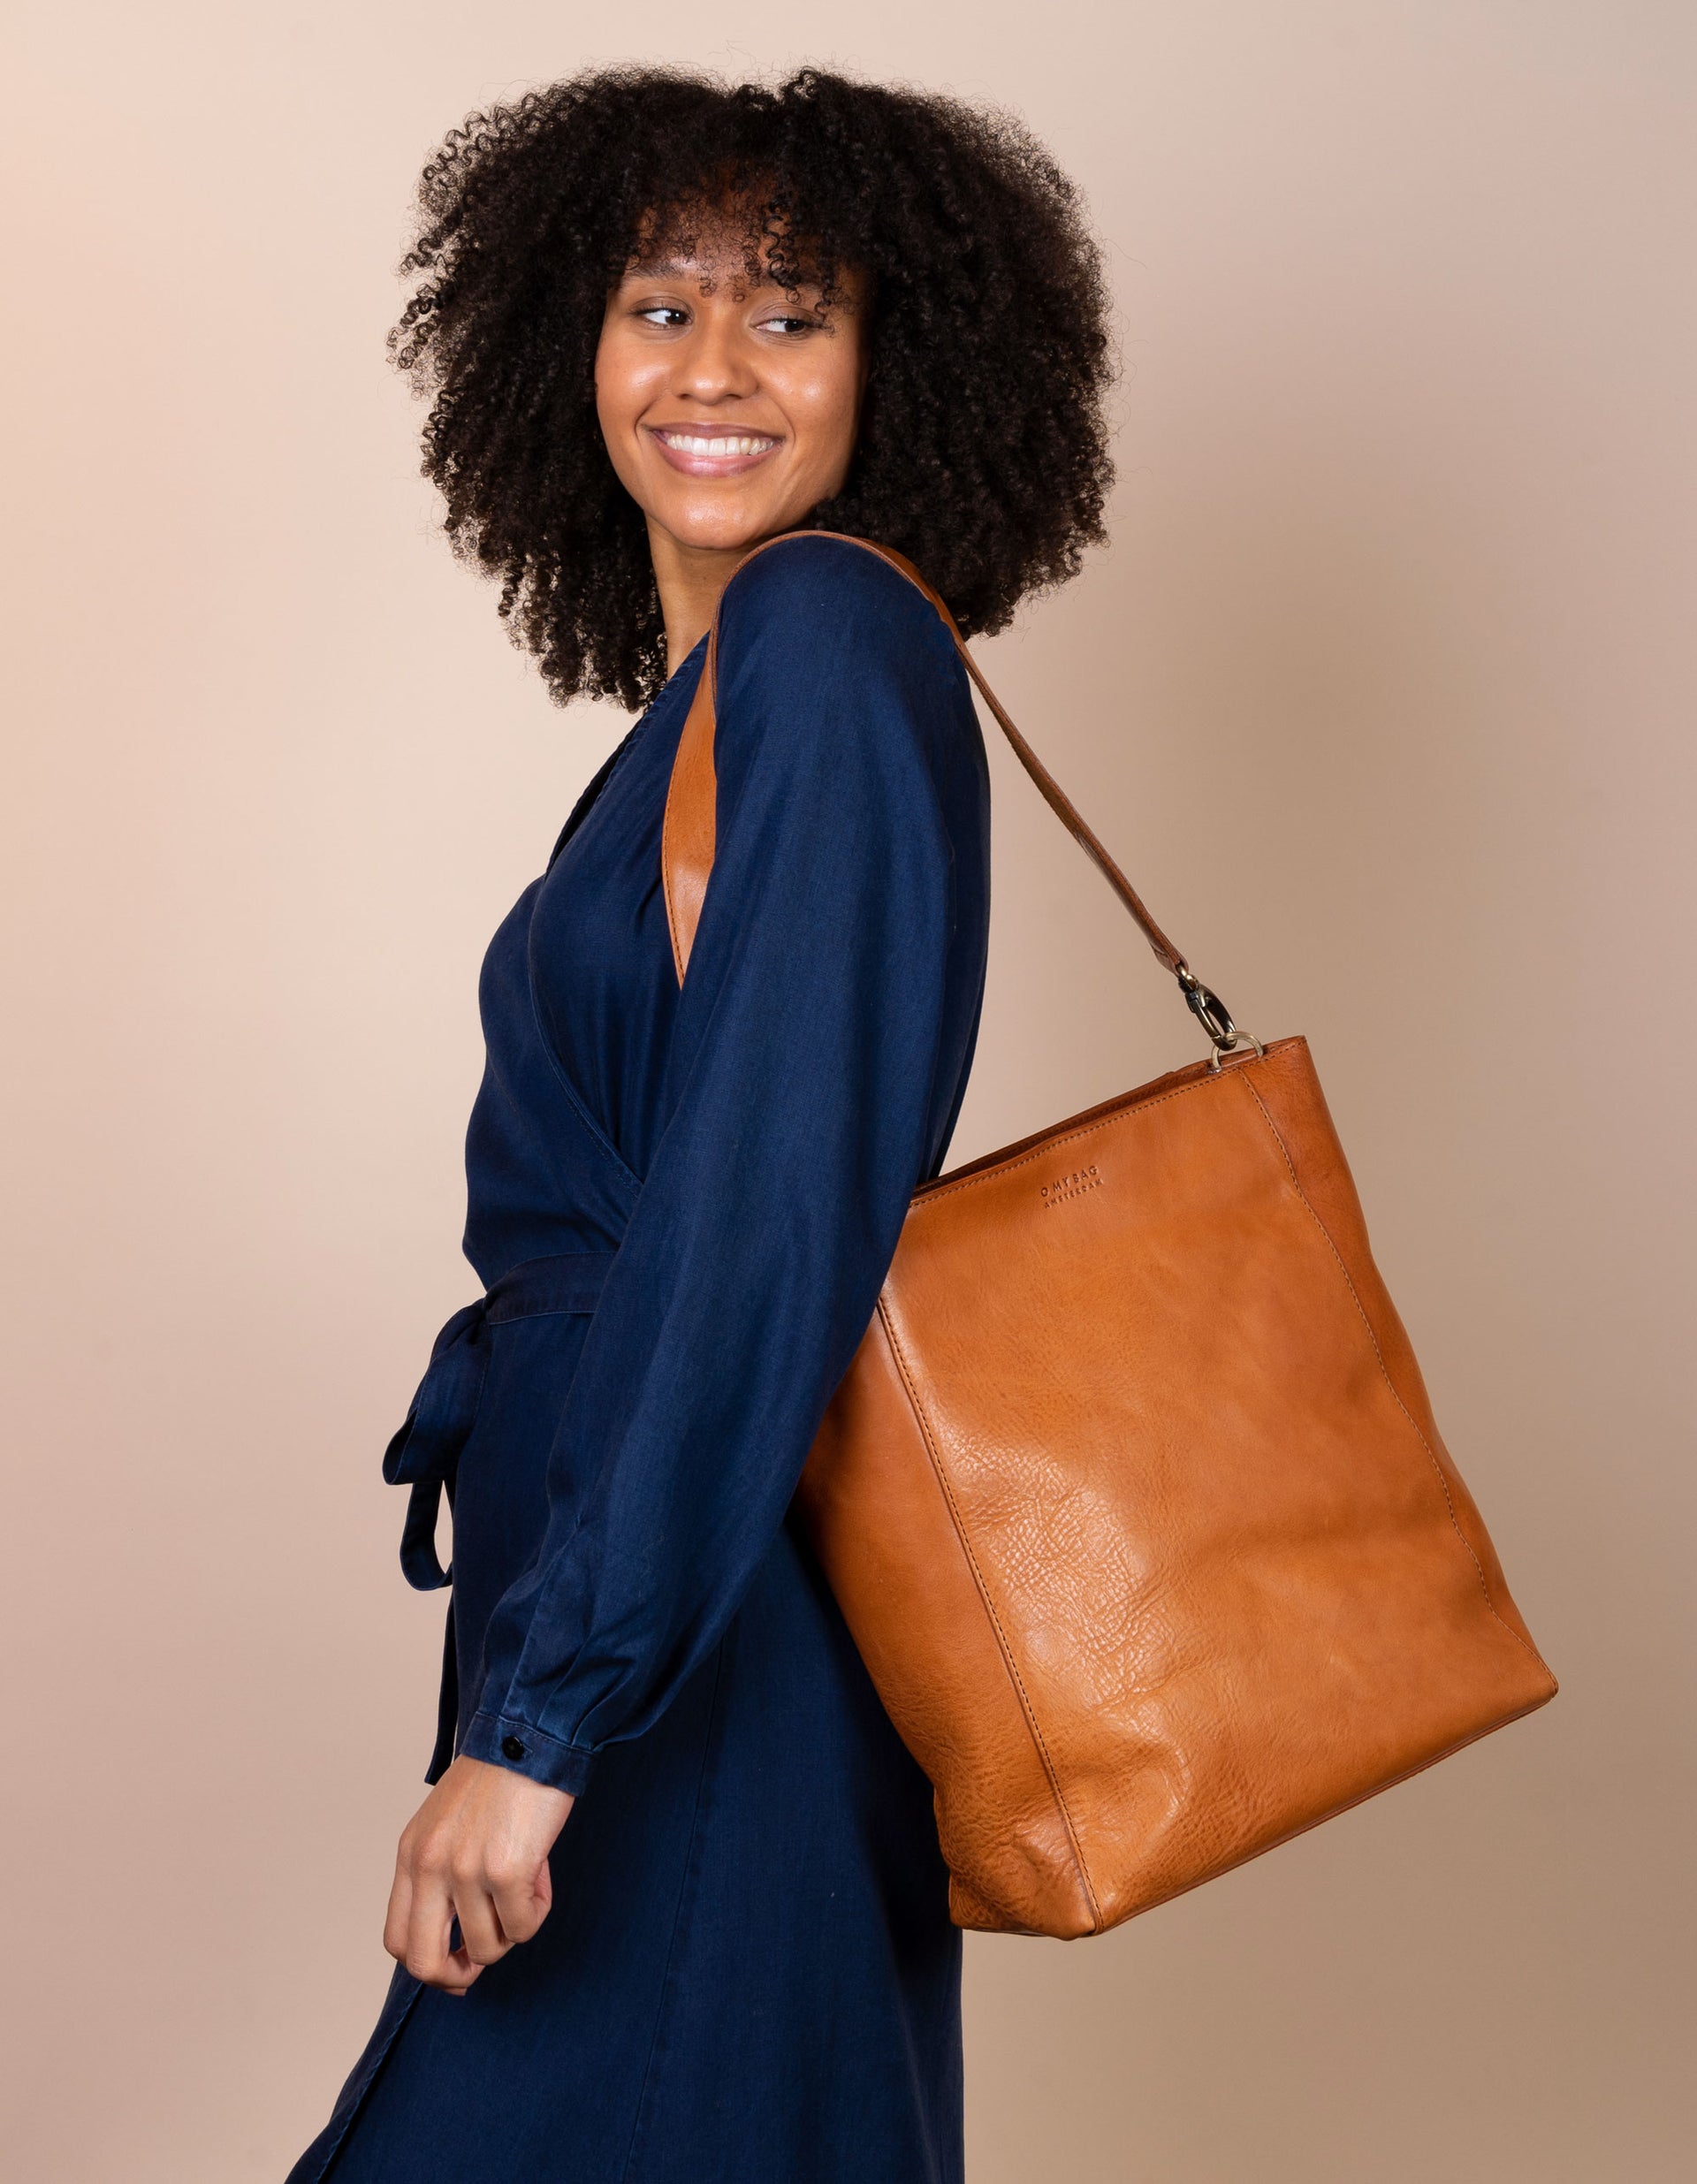 Sofia Cognac Leather Stromboli Leather, female model image